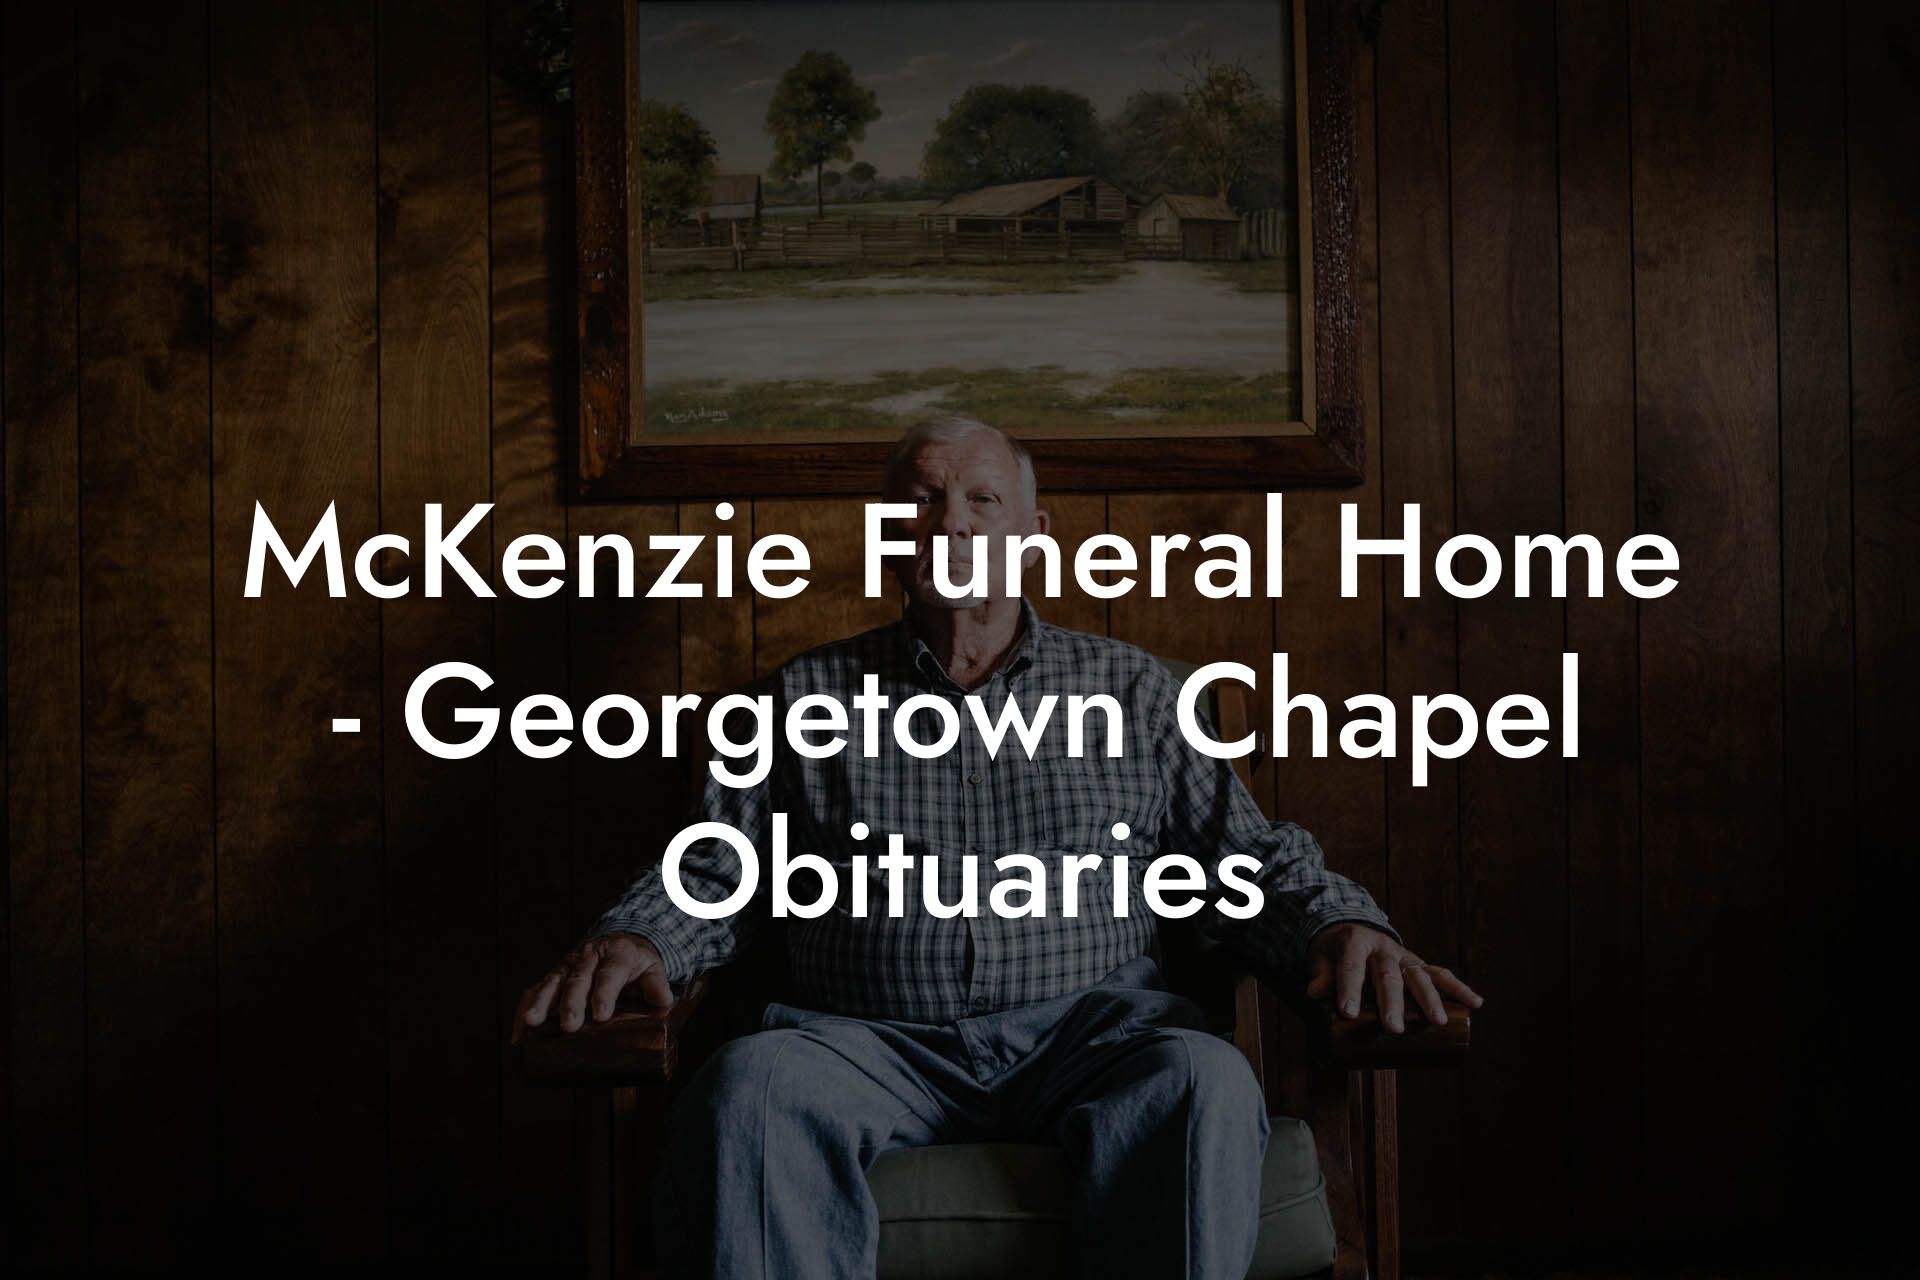 McKenzie Funeral Home - Georgetown Chapel Obituaries